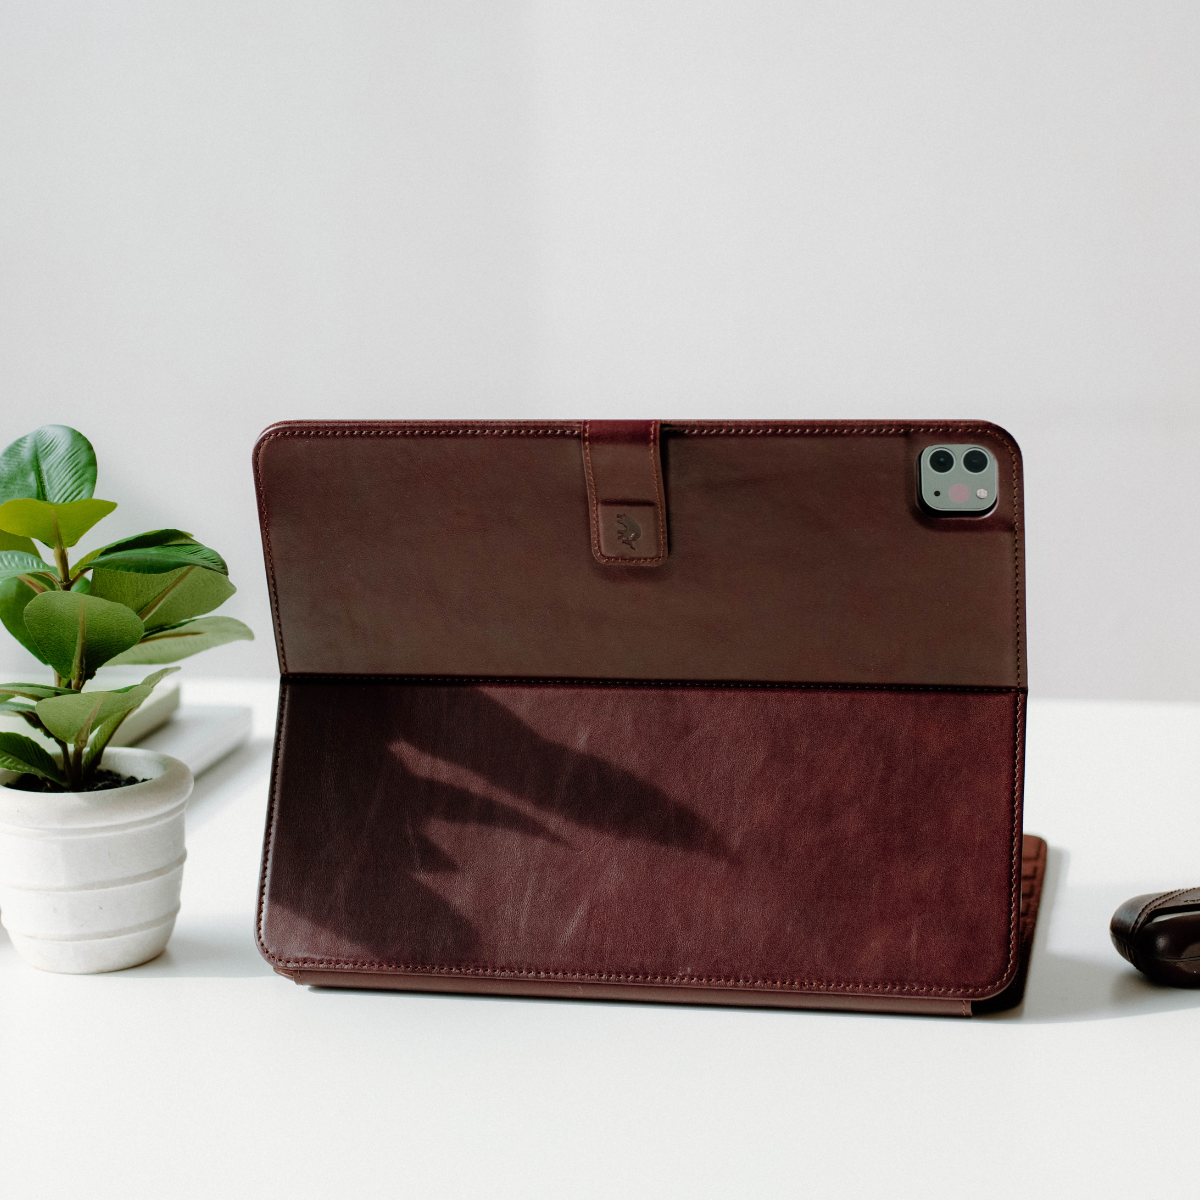 Leather iPad Pro Case - BOURBON